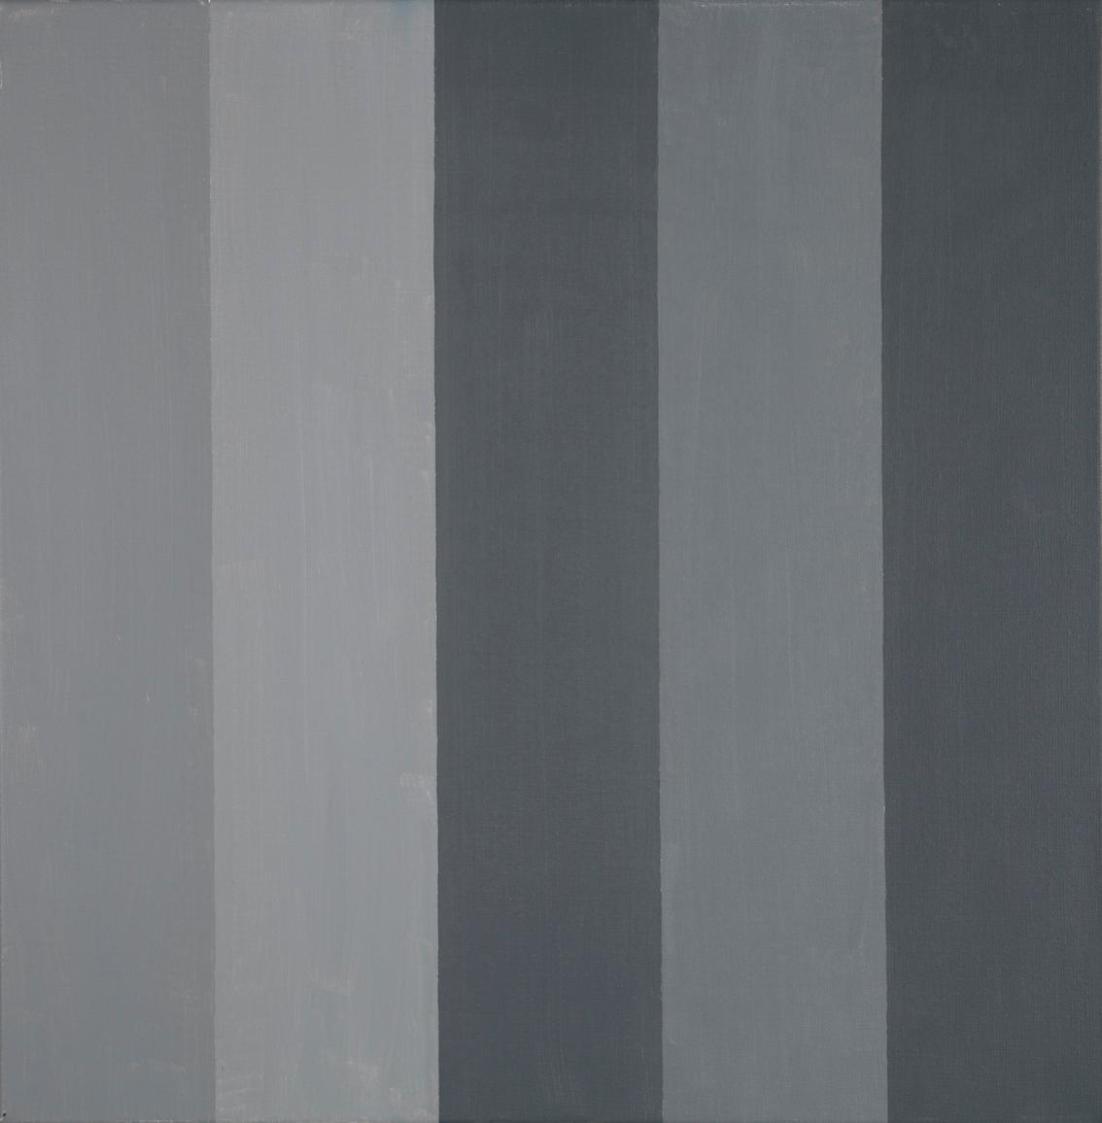 Heimo Zobernig, Ohne Titel (Diptychon), 1989, Öl auf Leinwand, 50 x 50 x 2 cm, 2011 Dauerleihga ...